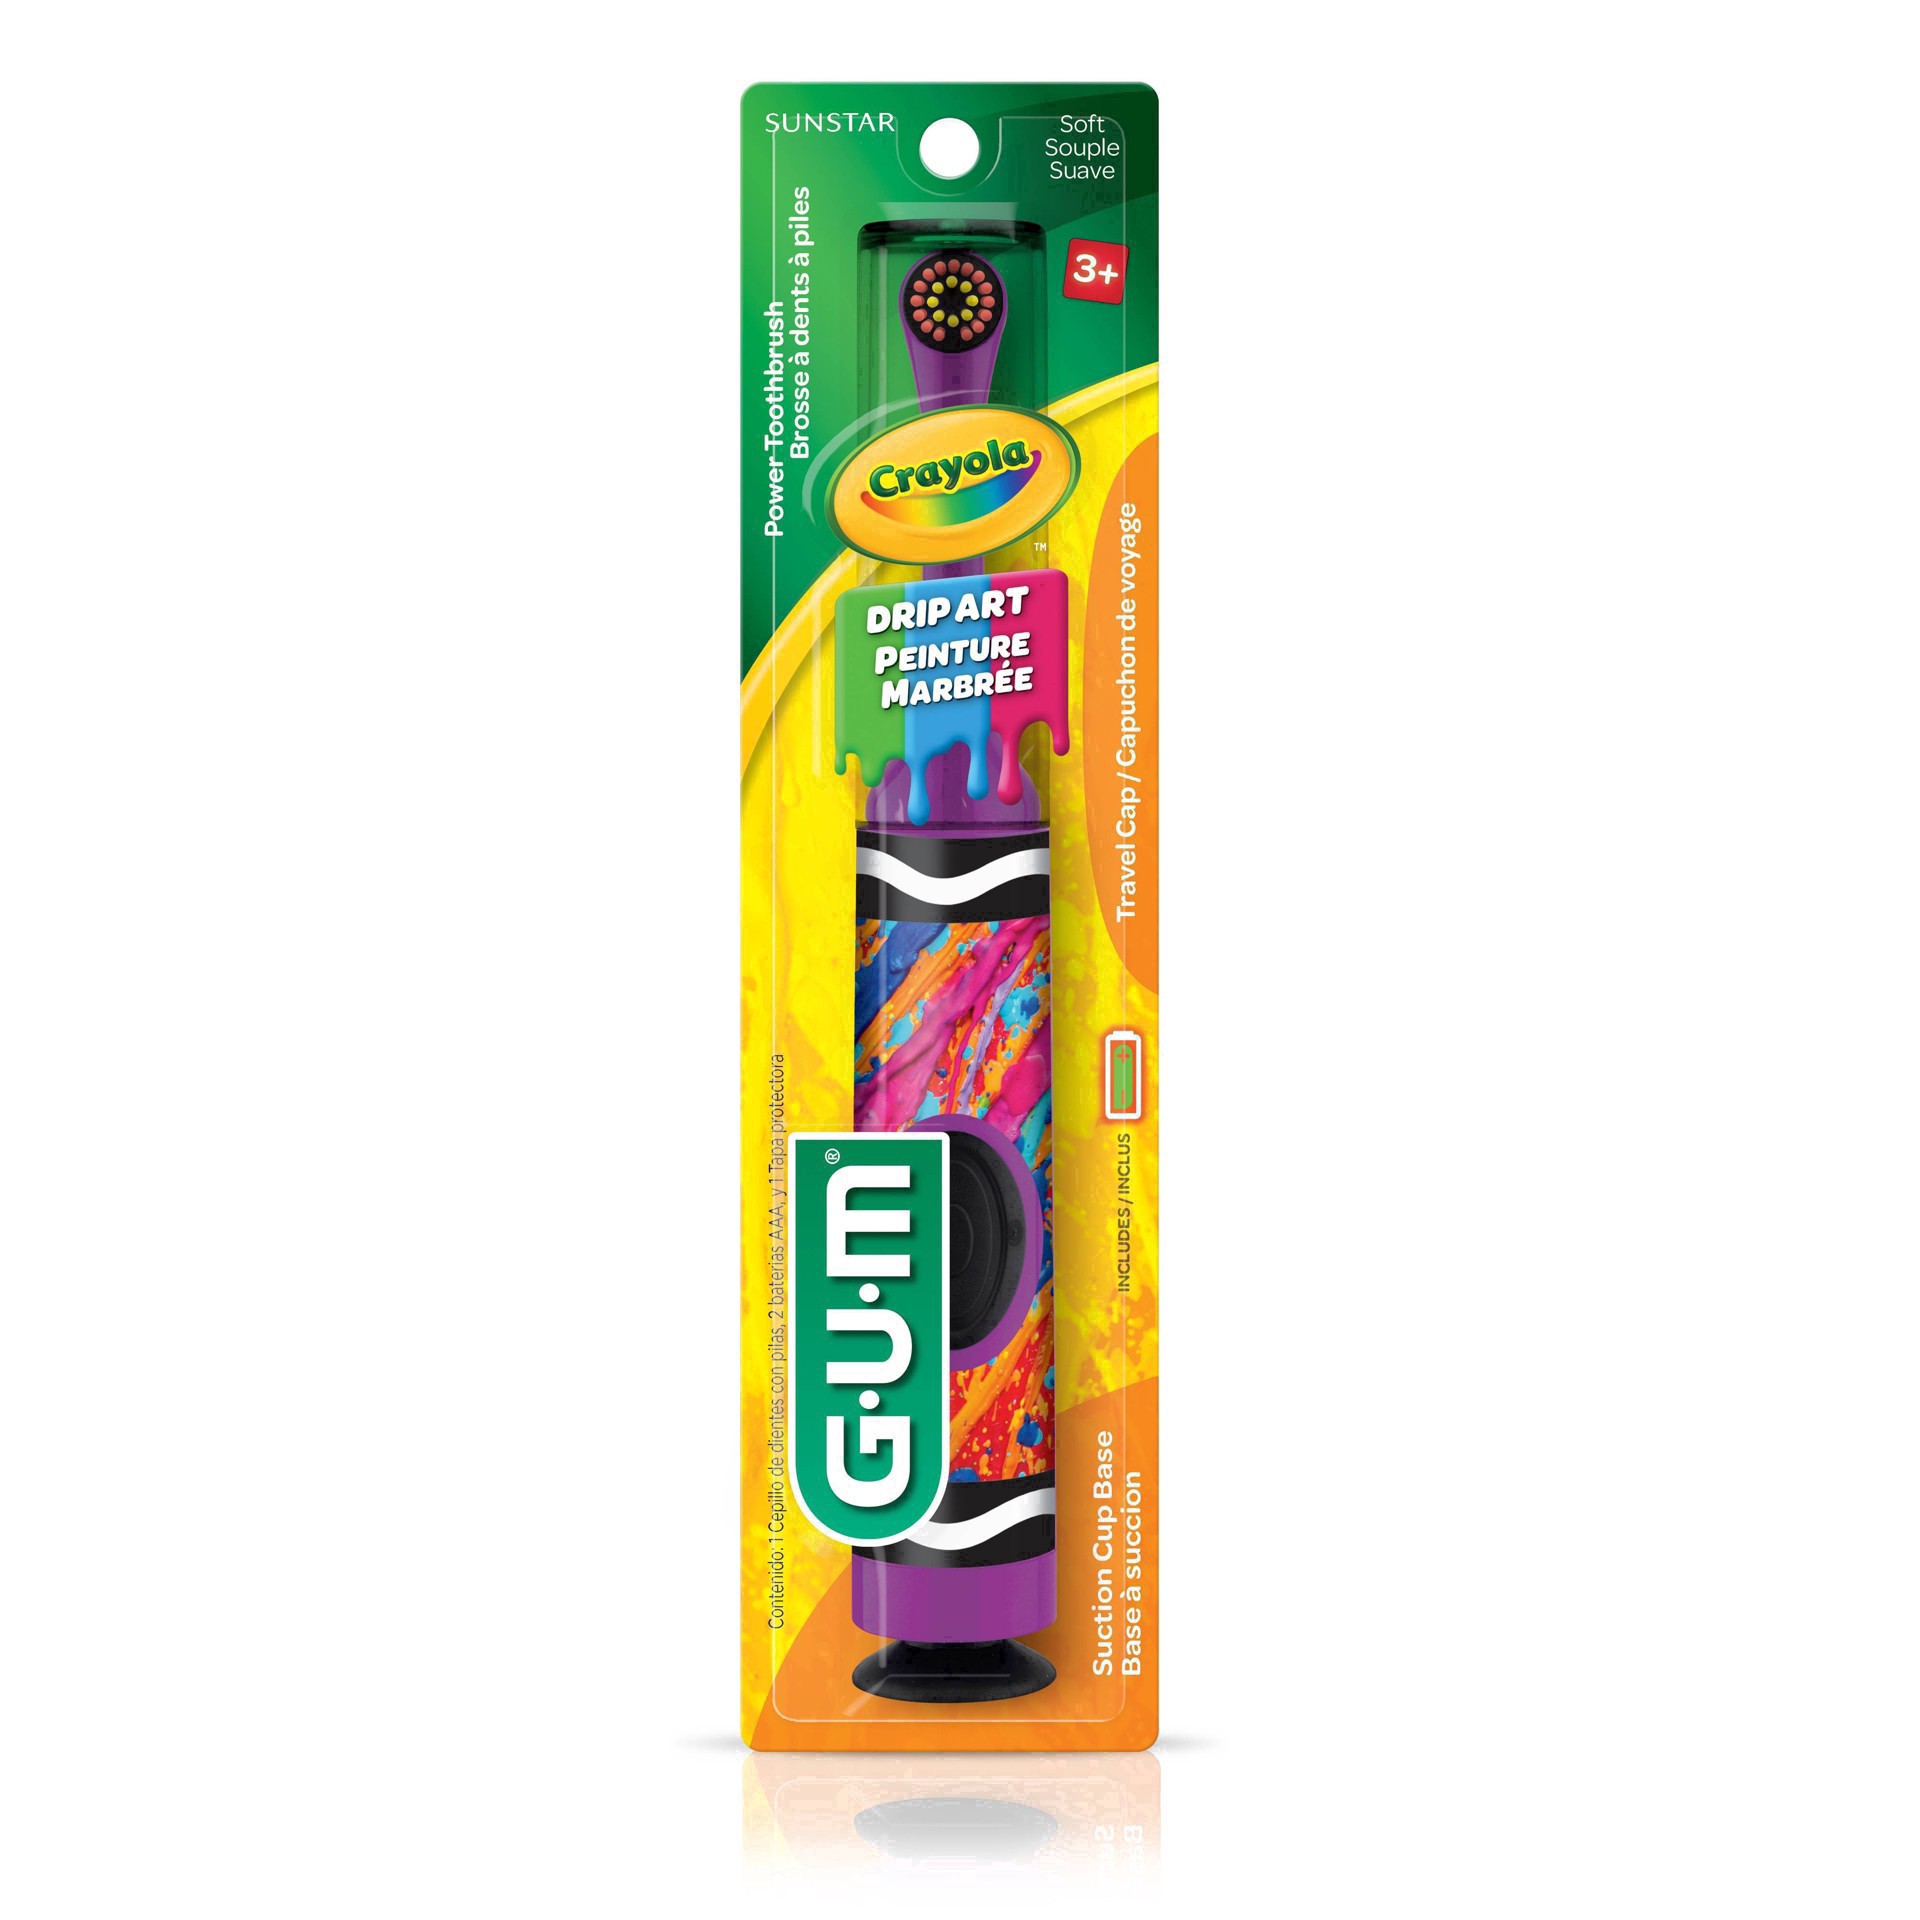 slide 27 of 50, G-U-M Crayola Electric Toothbrush, 1 ct